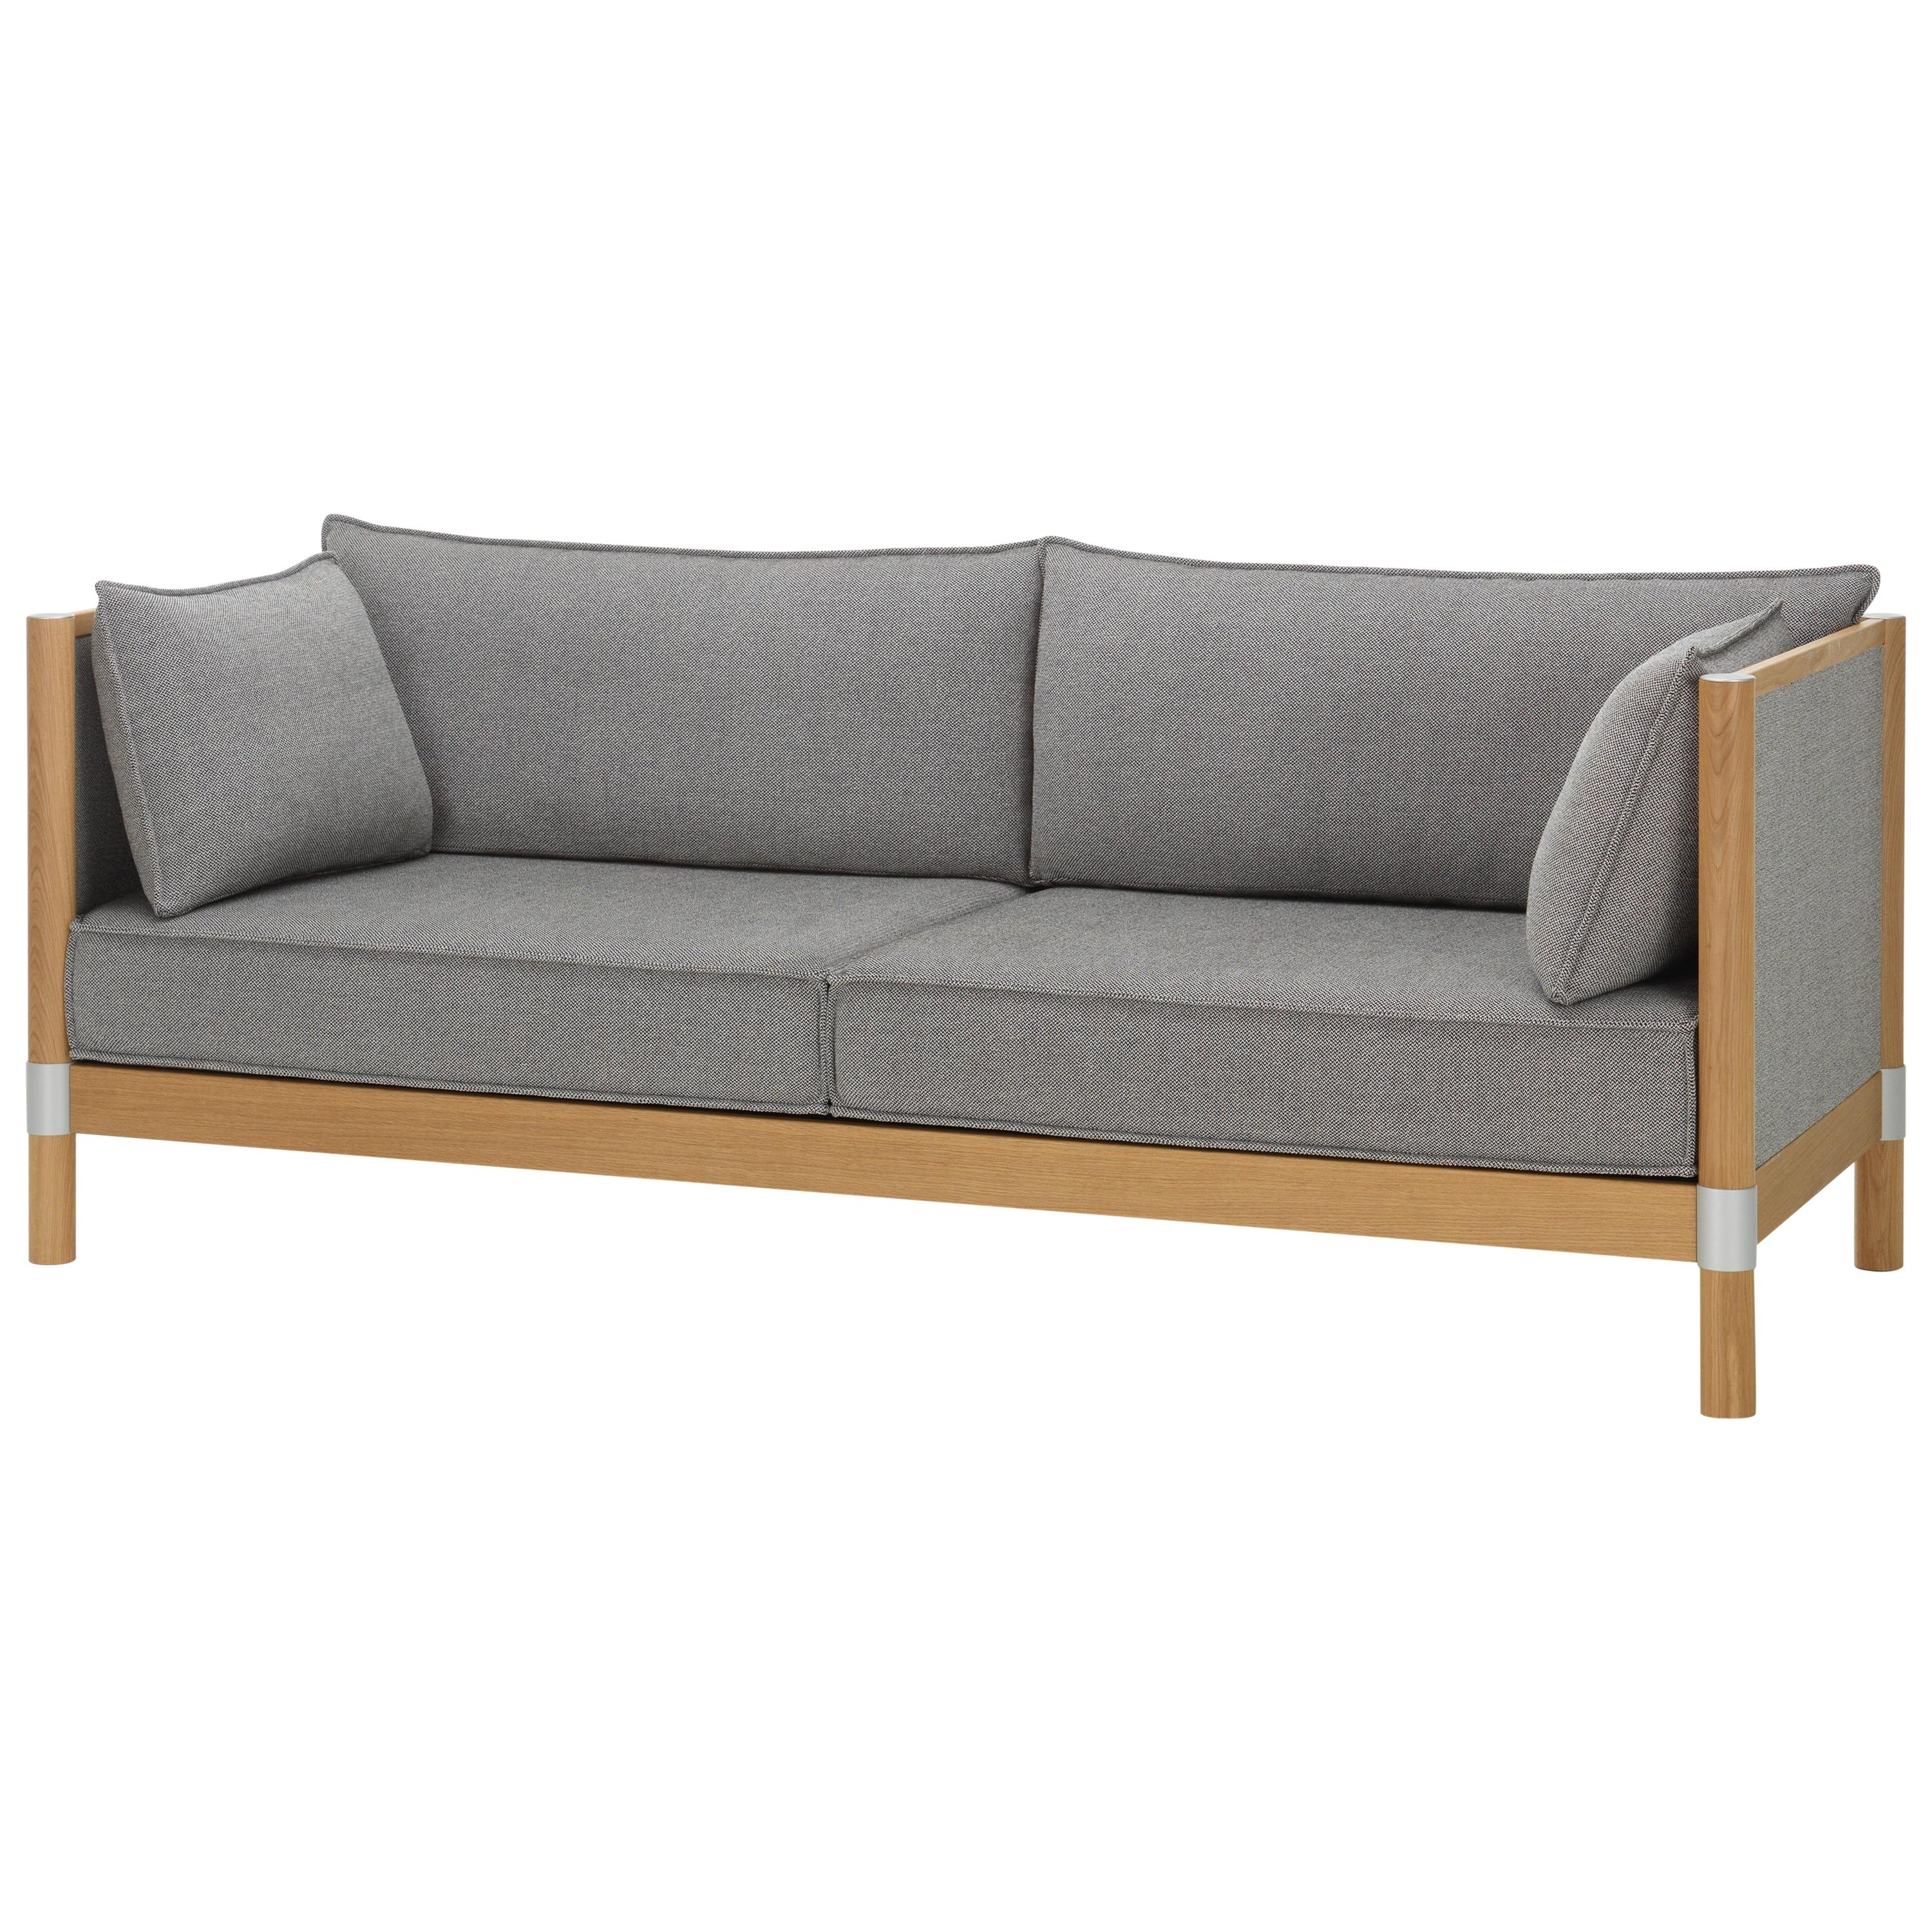 Vitra Cyl Fabric Sofa in Sierra Grey Plano by Ronan & Erwan Bouroullec For Sale